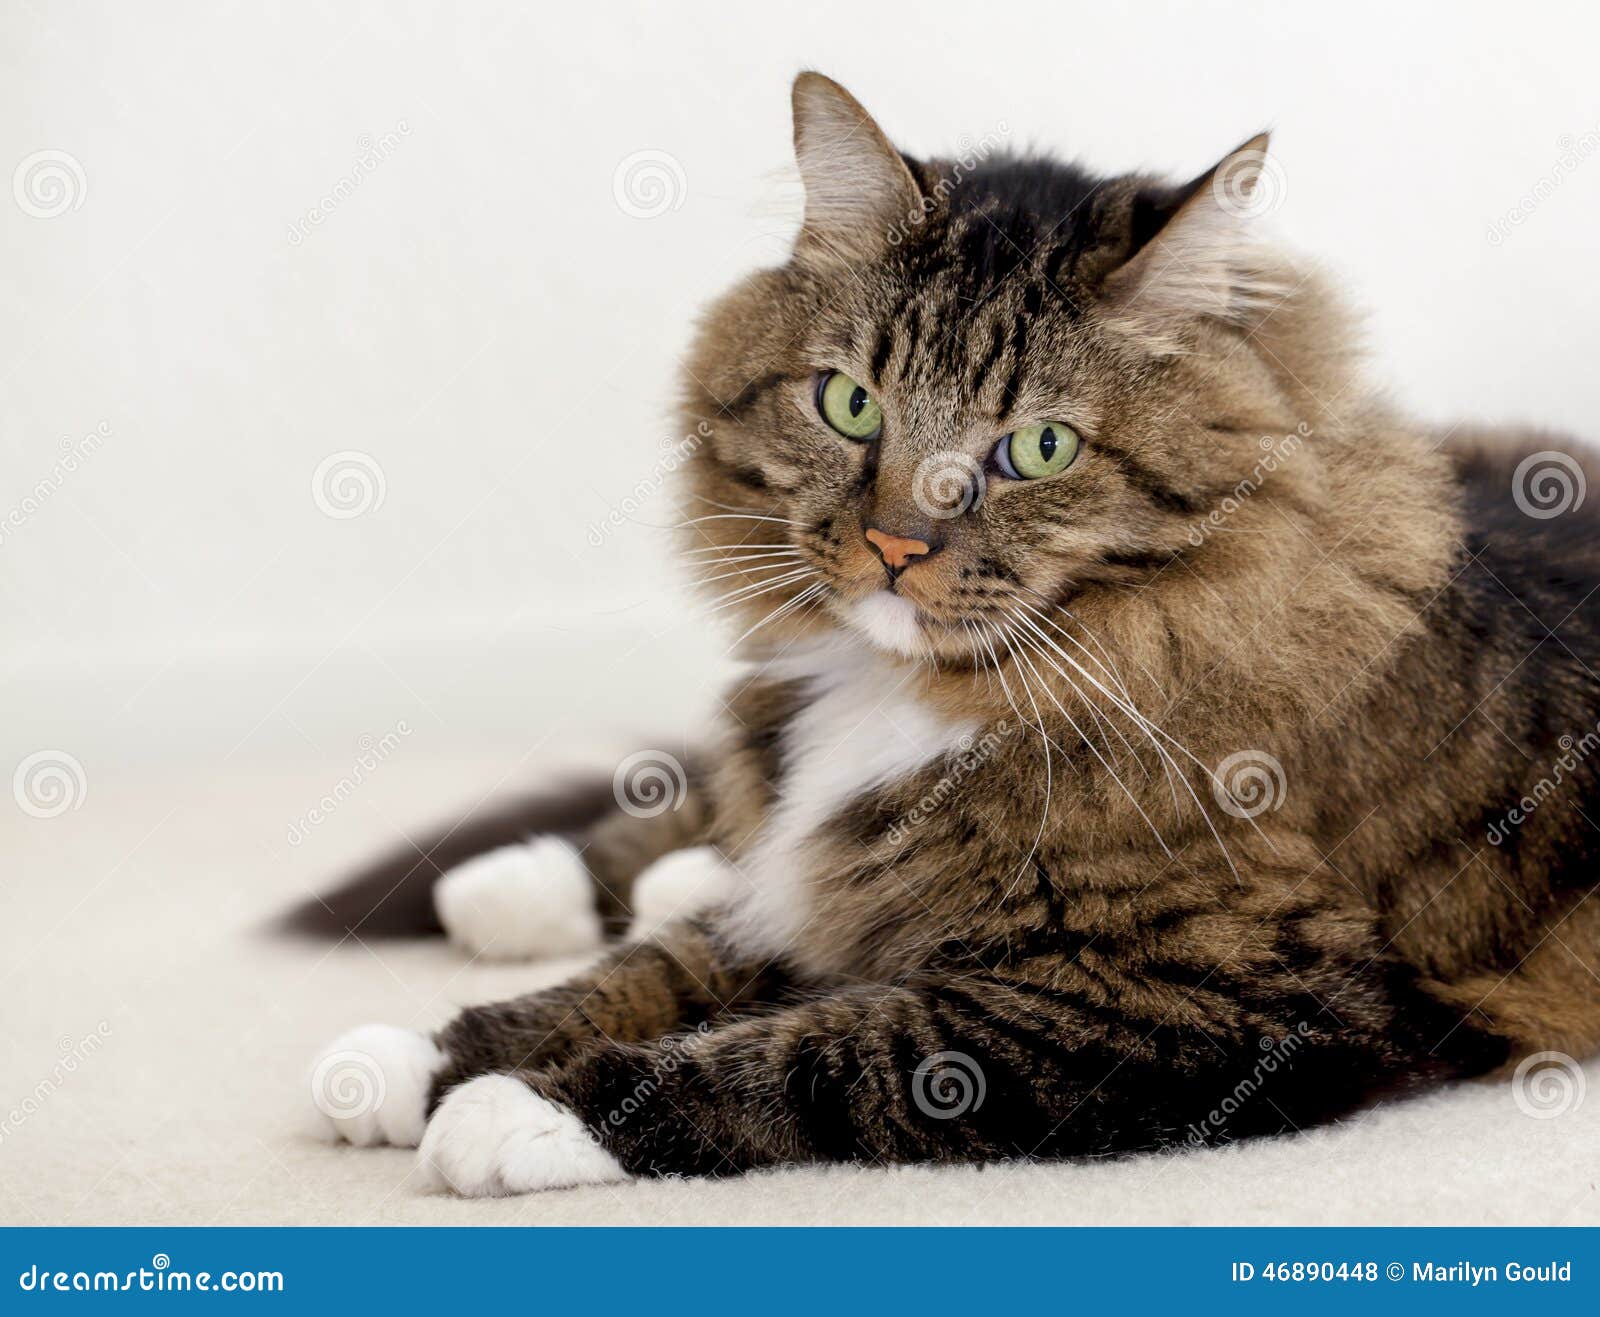 Long Hair Tabby Cat stock photo. Image of gould, mammal - 46890448